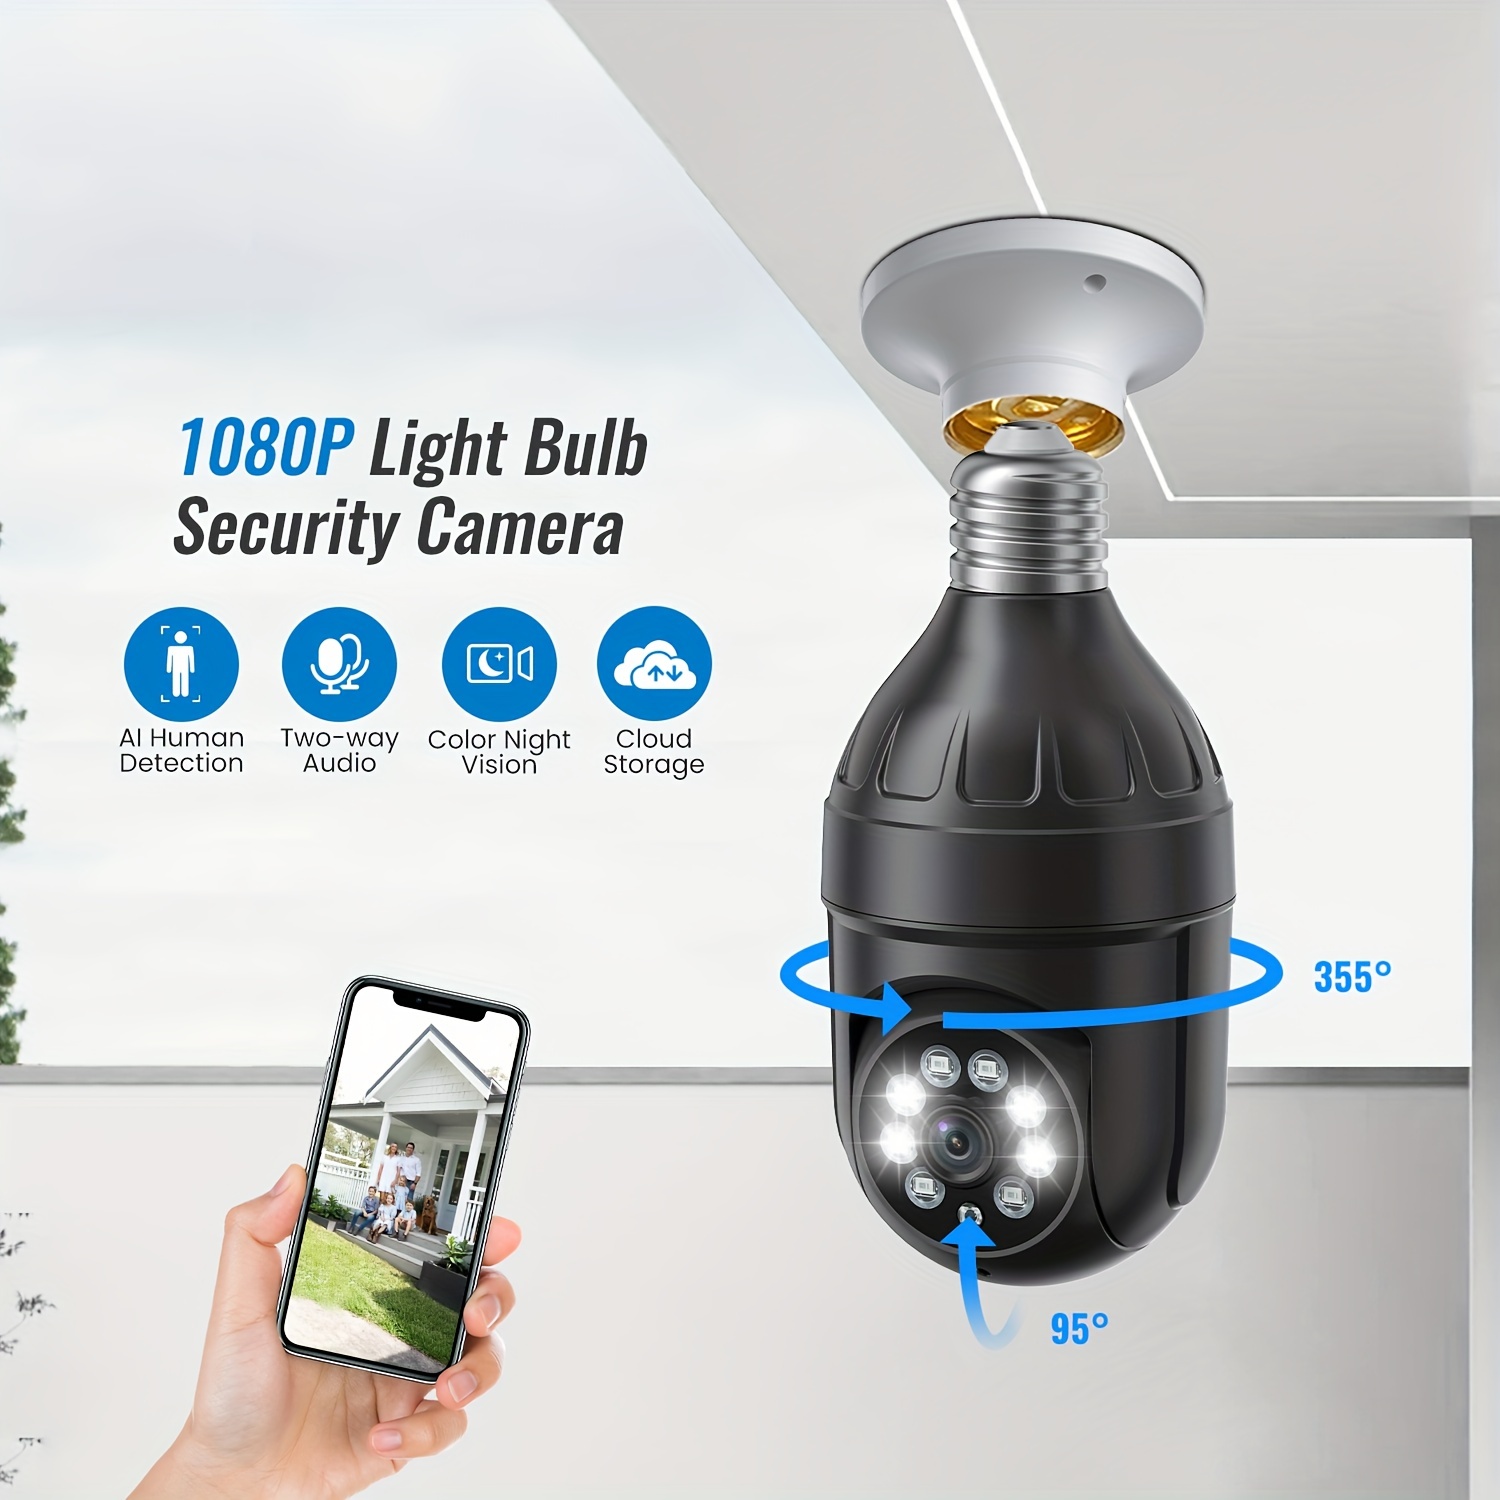  Light Bulb Security Camera Wireless Outdoor - 2.4GHz